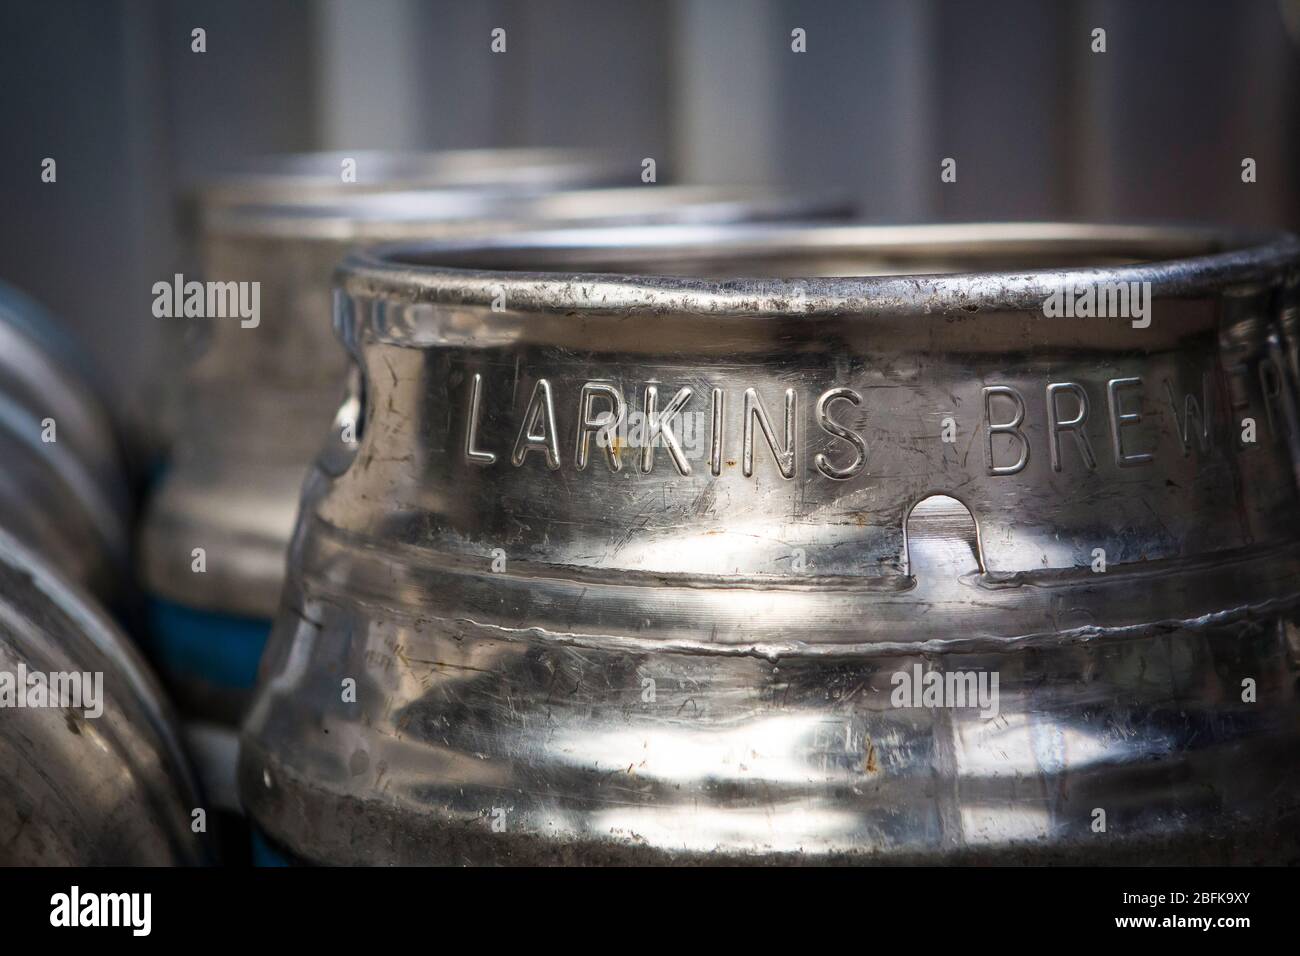 Larkins Brewery award winning brewery and hop farm in Chiddingstone, Kent, UK Stock Photo